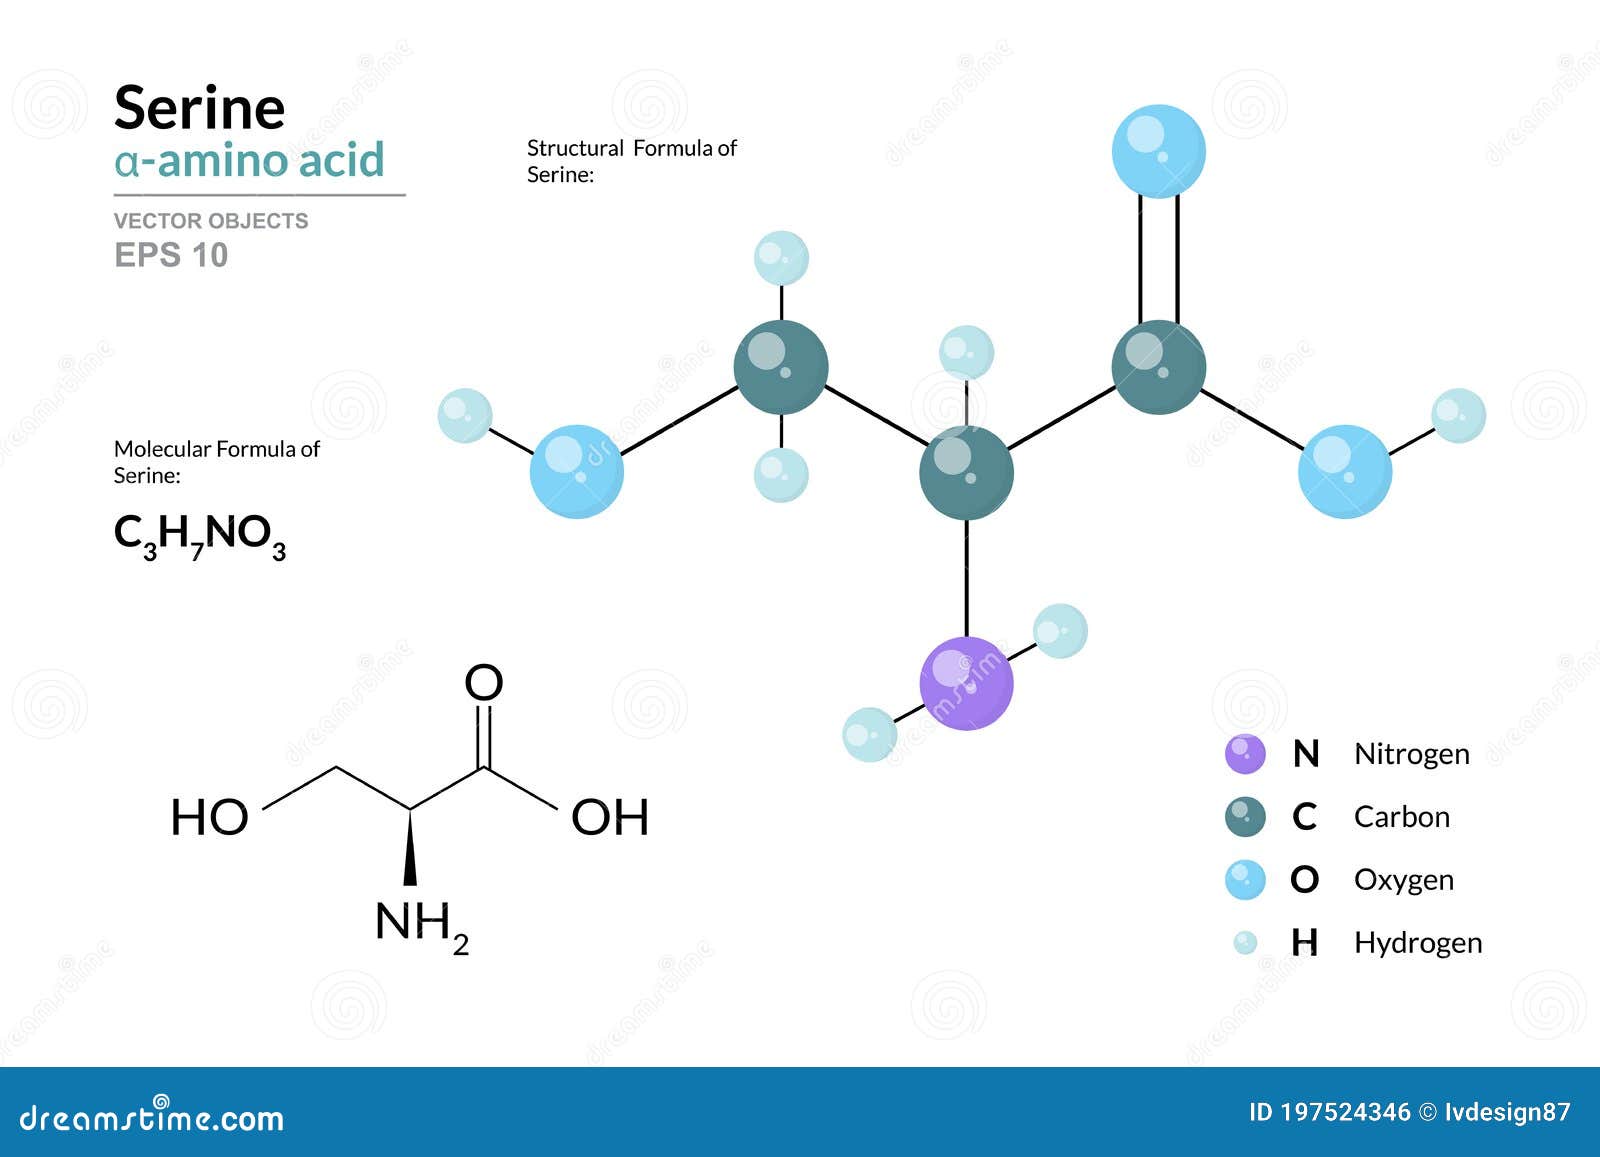 serine. ser c3h7no3. ÃÂ±-amino acid. structural chemical formula and molecule 3d model. atoms with color coding. 